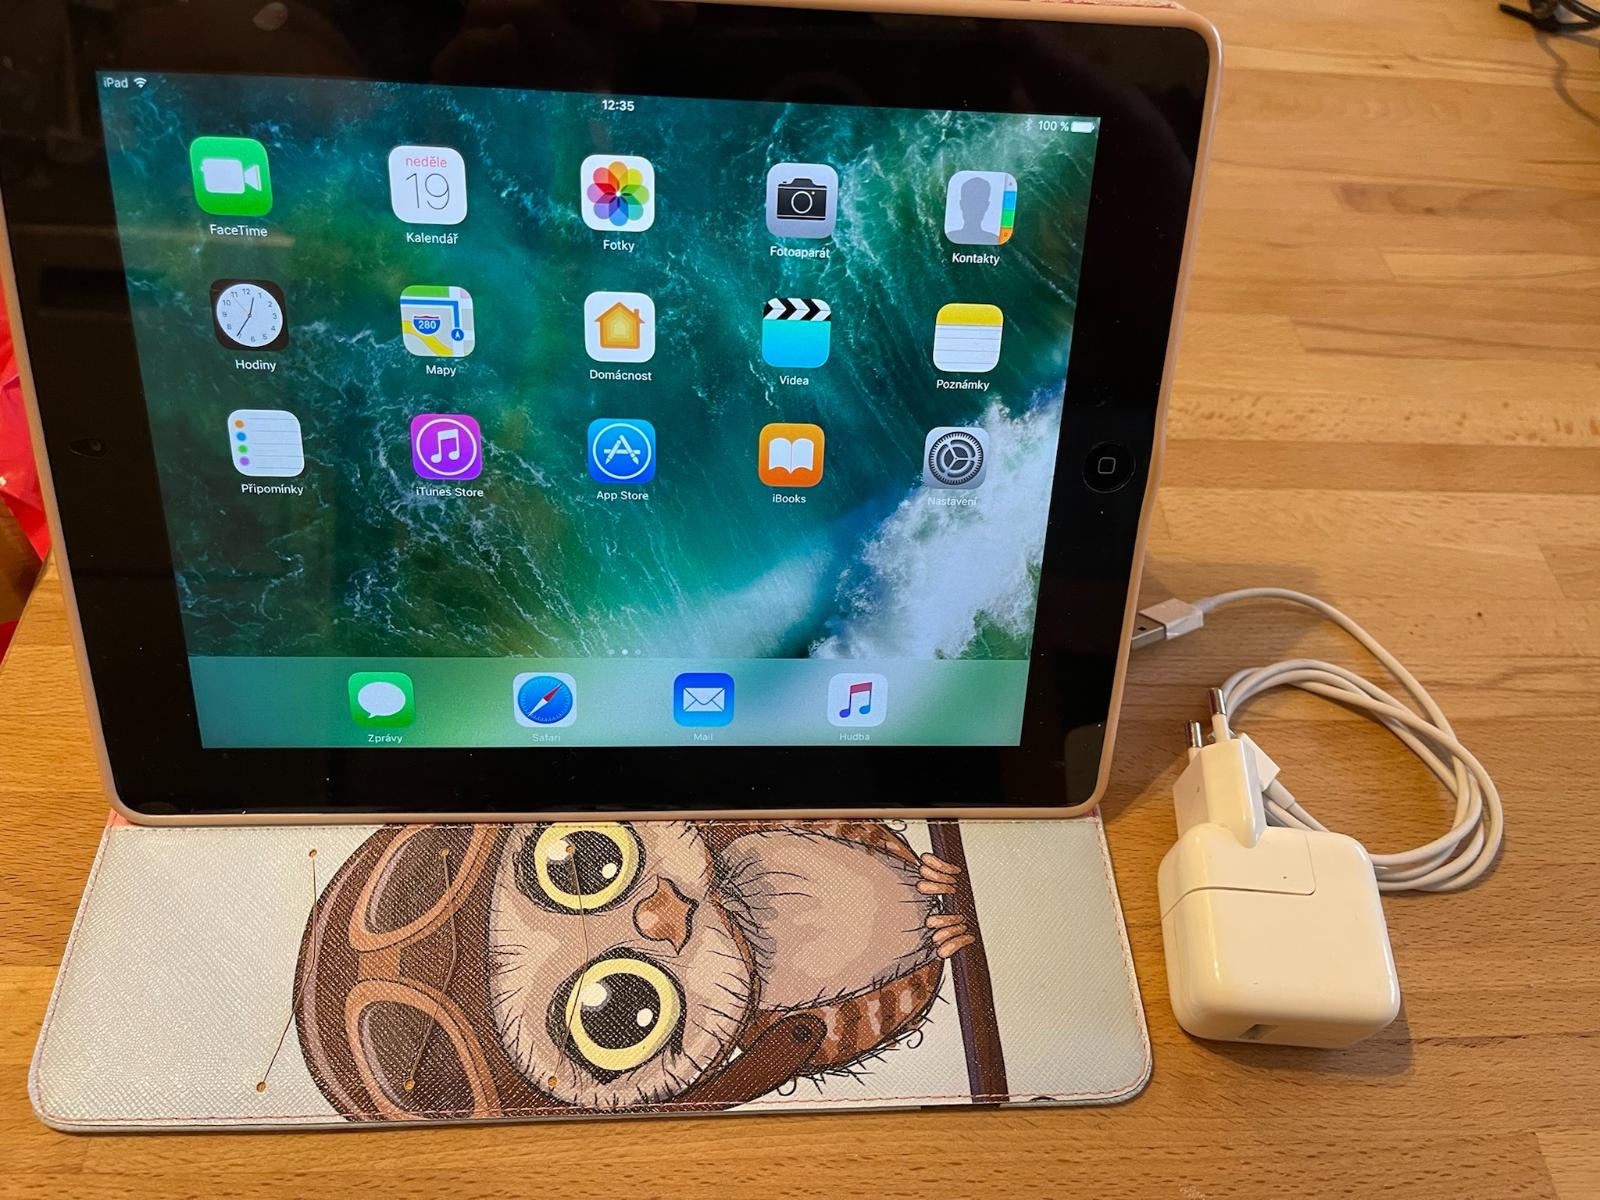 Apple iPad 4.generace s retina displejem, 16GB (md510fd/a) + pouzdro. - Počítače a hry